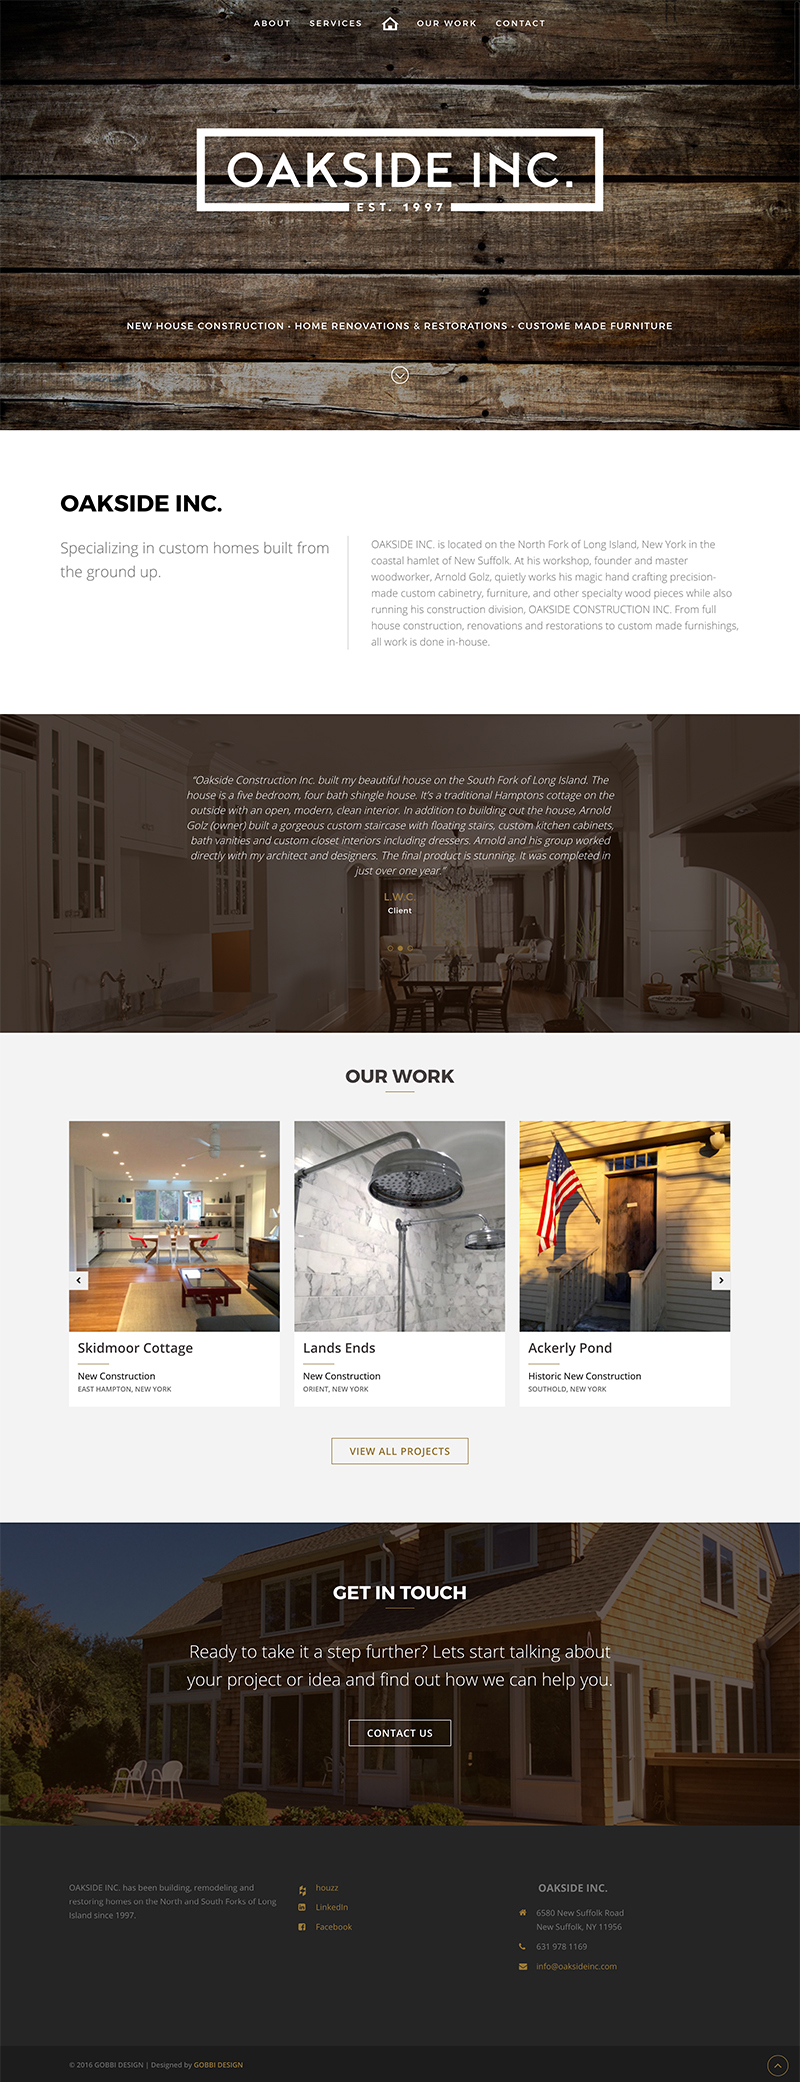 OaksideInc.com Home Page Design